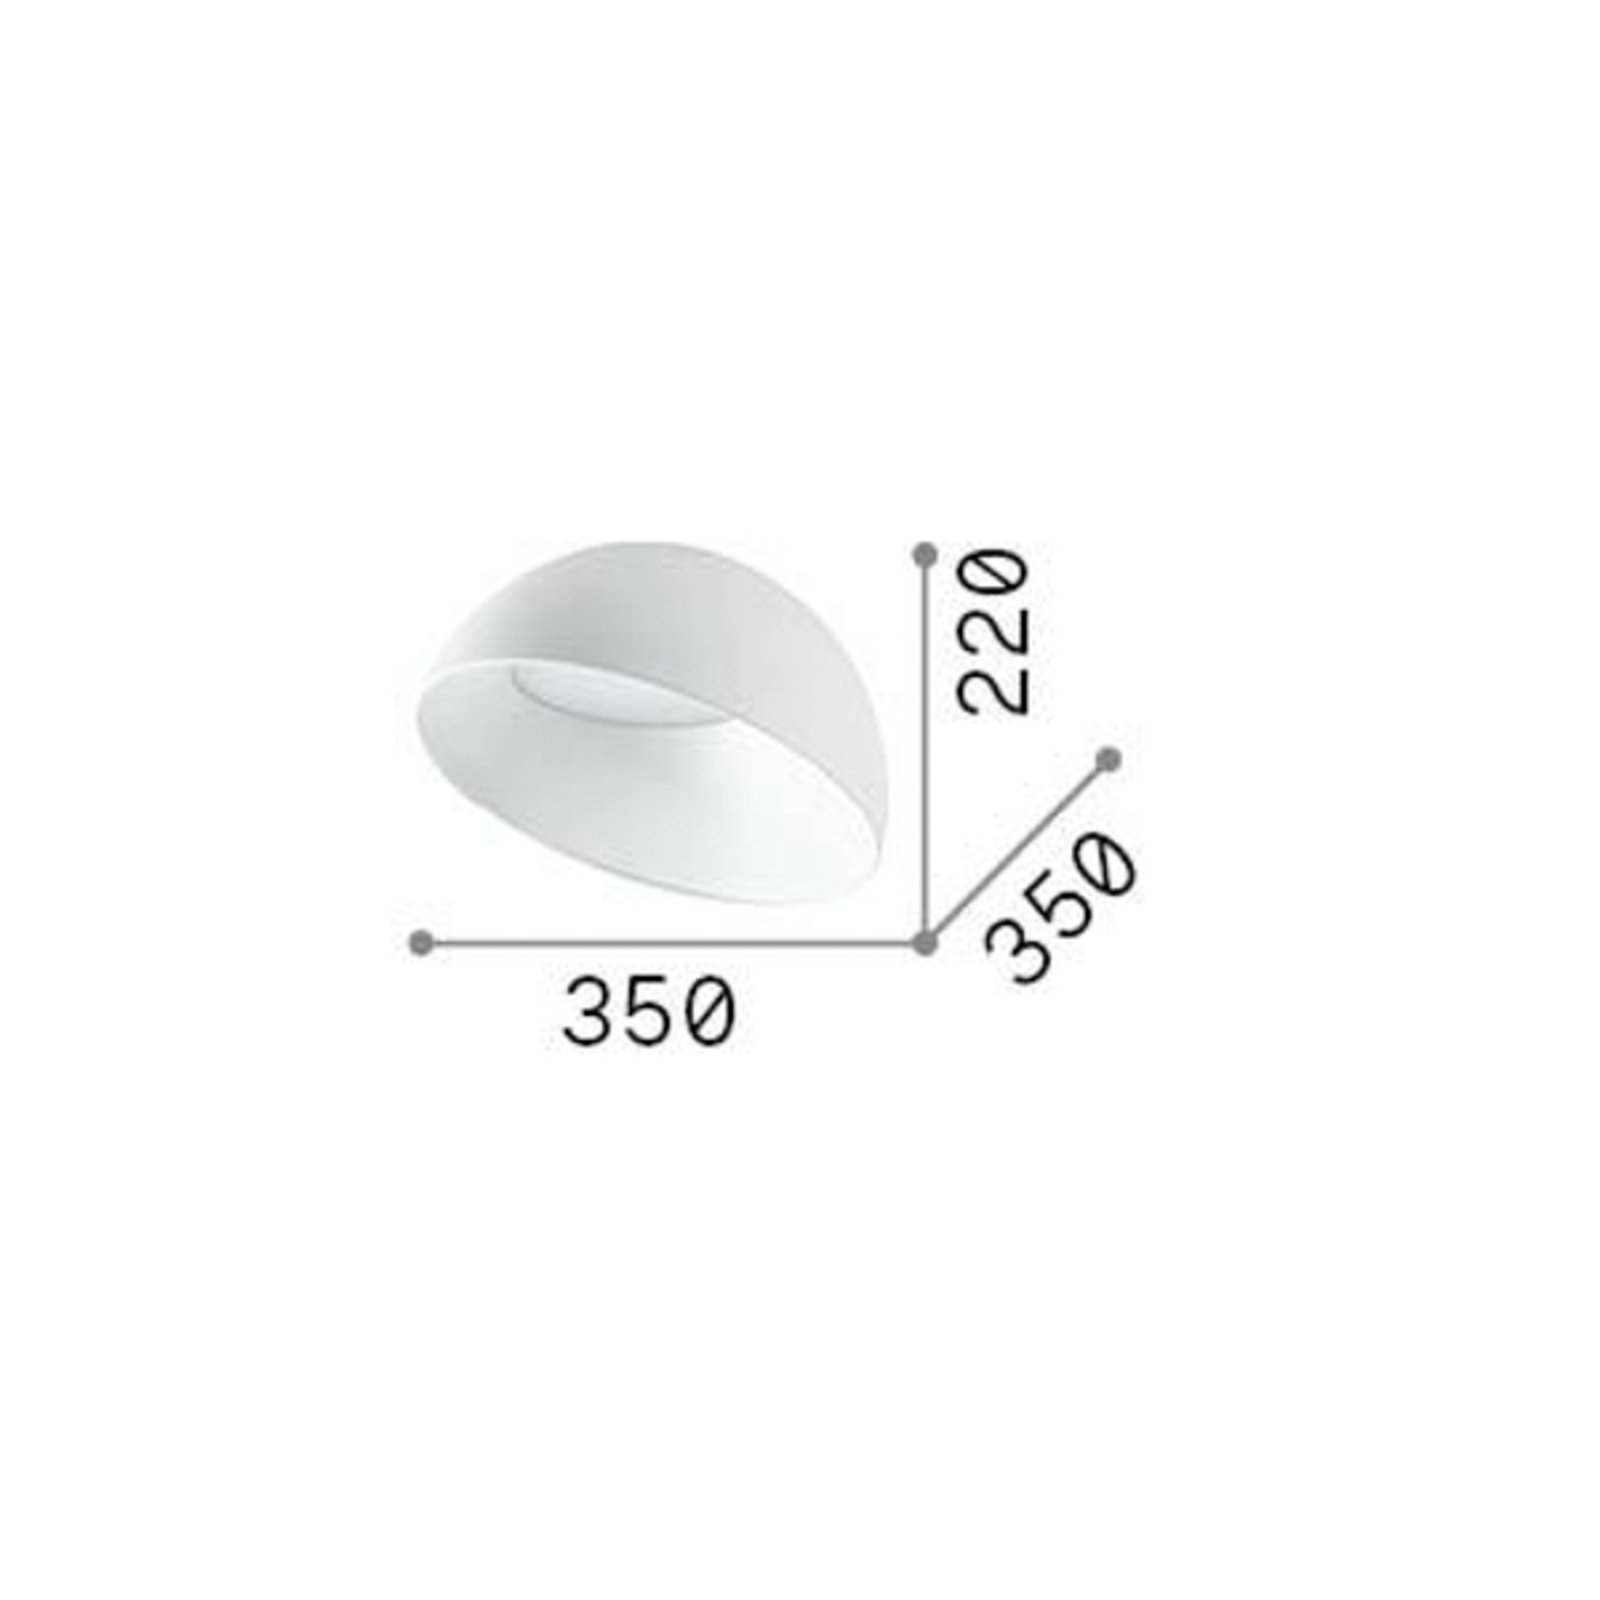 Ideal Lux LED plafondlamp Corolla-2, wit, metaal, Ø 35 cm